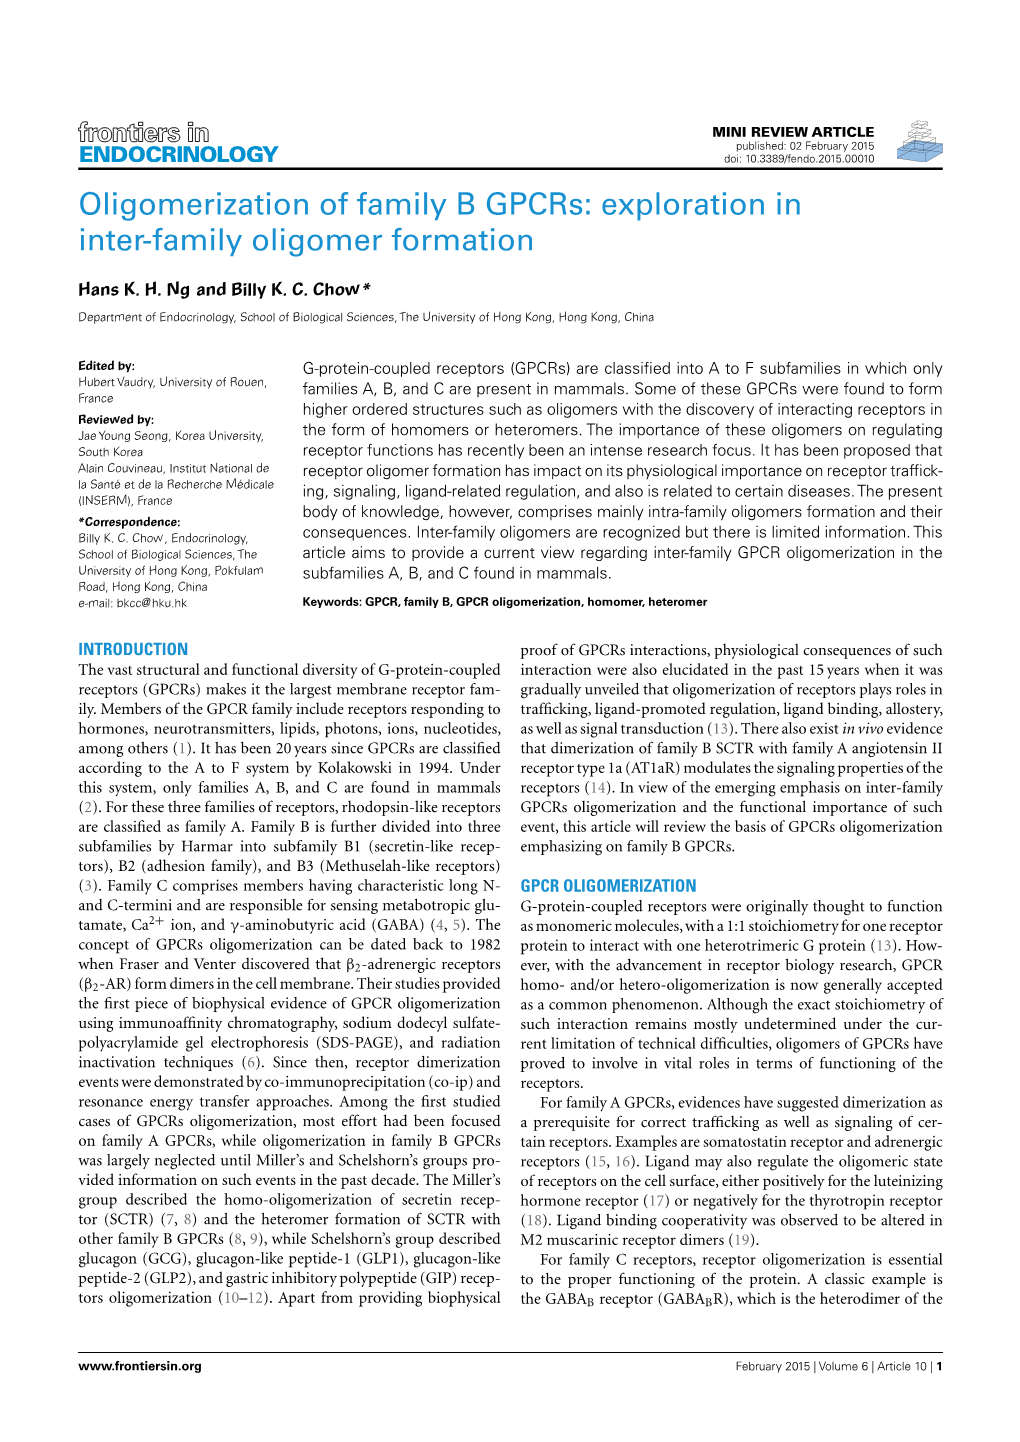 Oligomerization of Family B Gpcrs: Exploration in Inter-Family Oligomer Formation